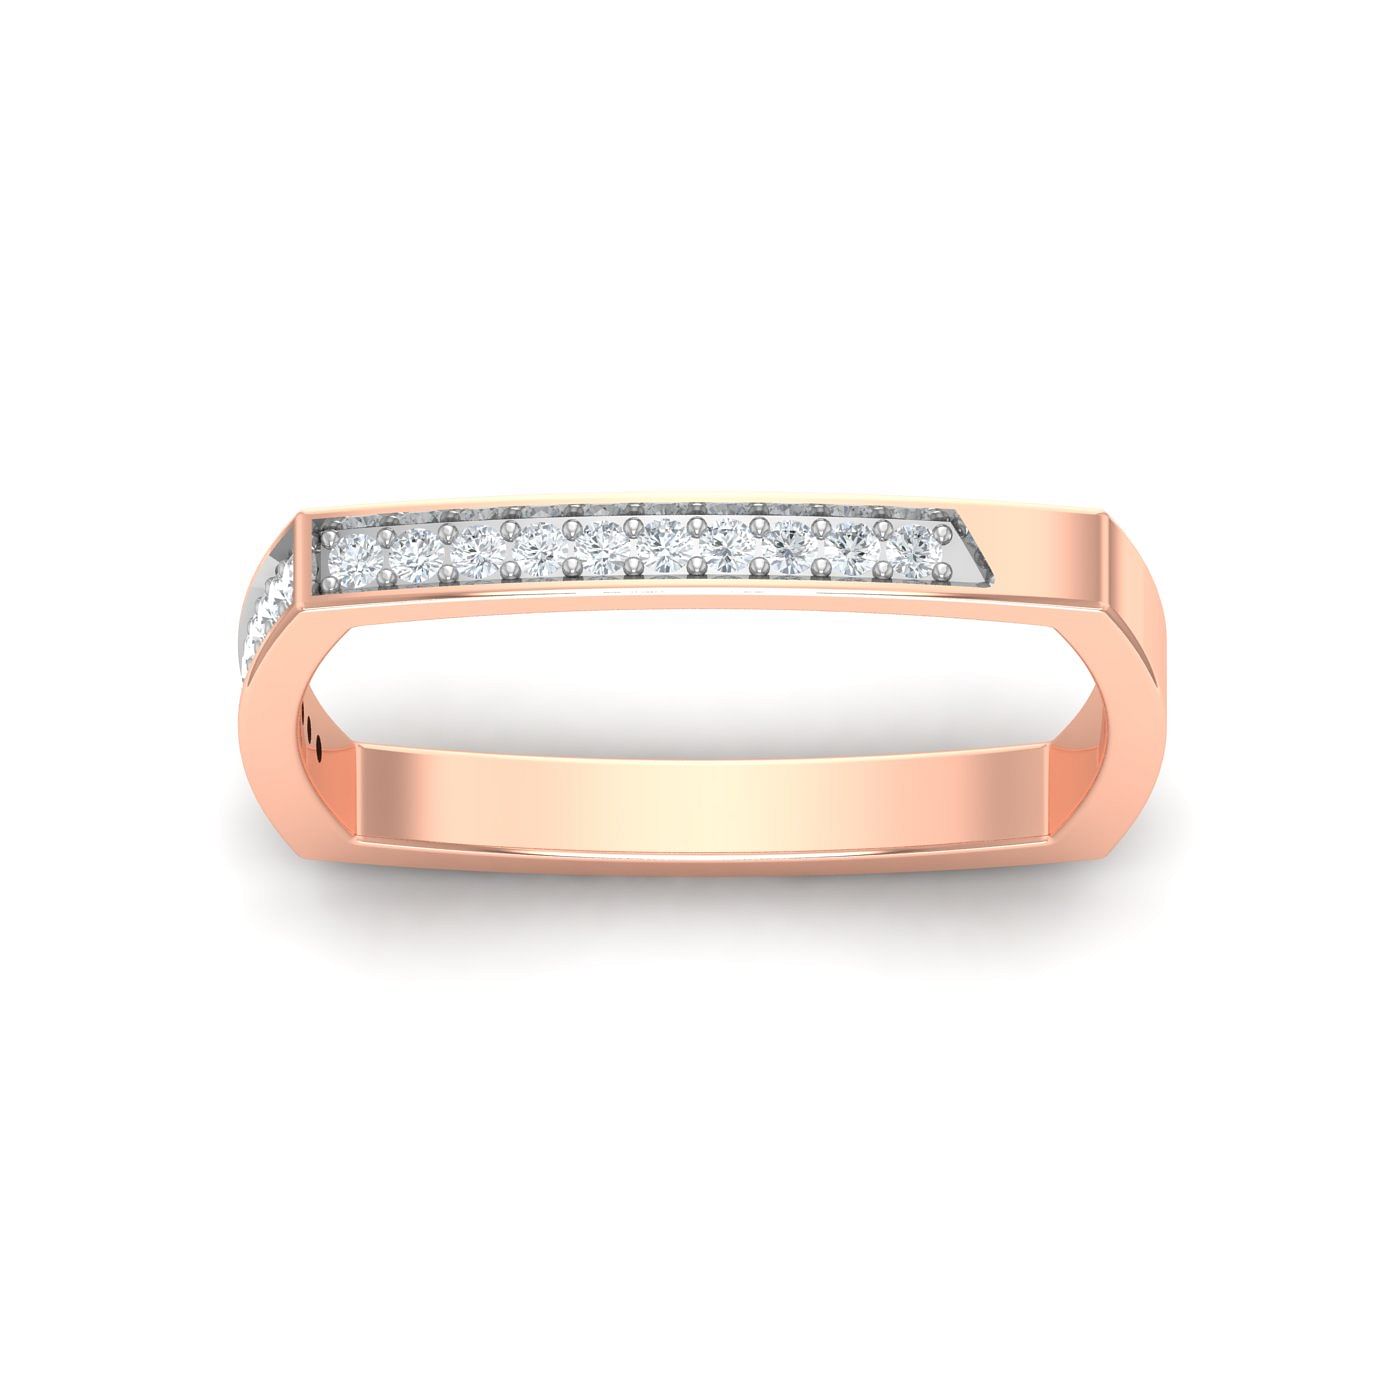 Square Design Rose Gold Diamond Ring Band For Women